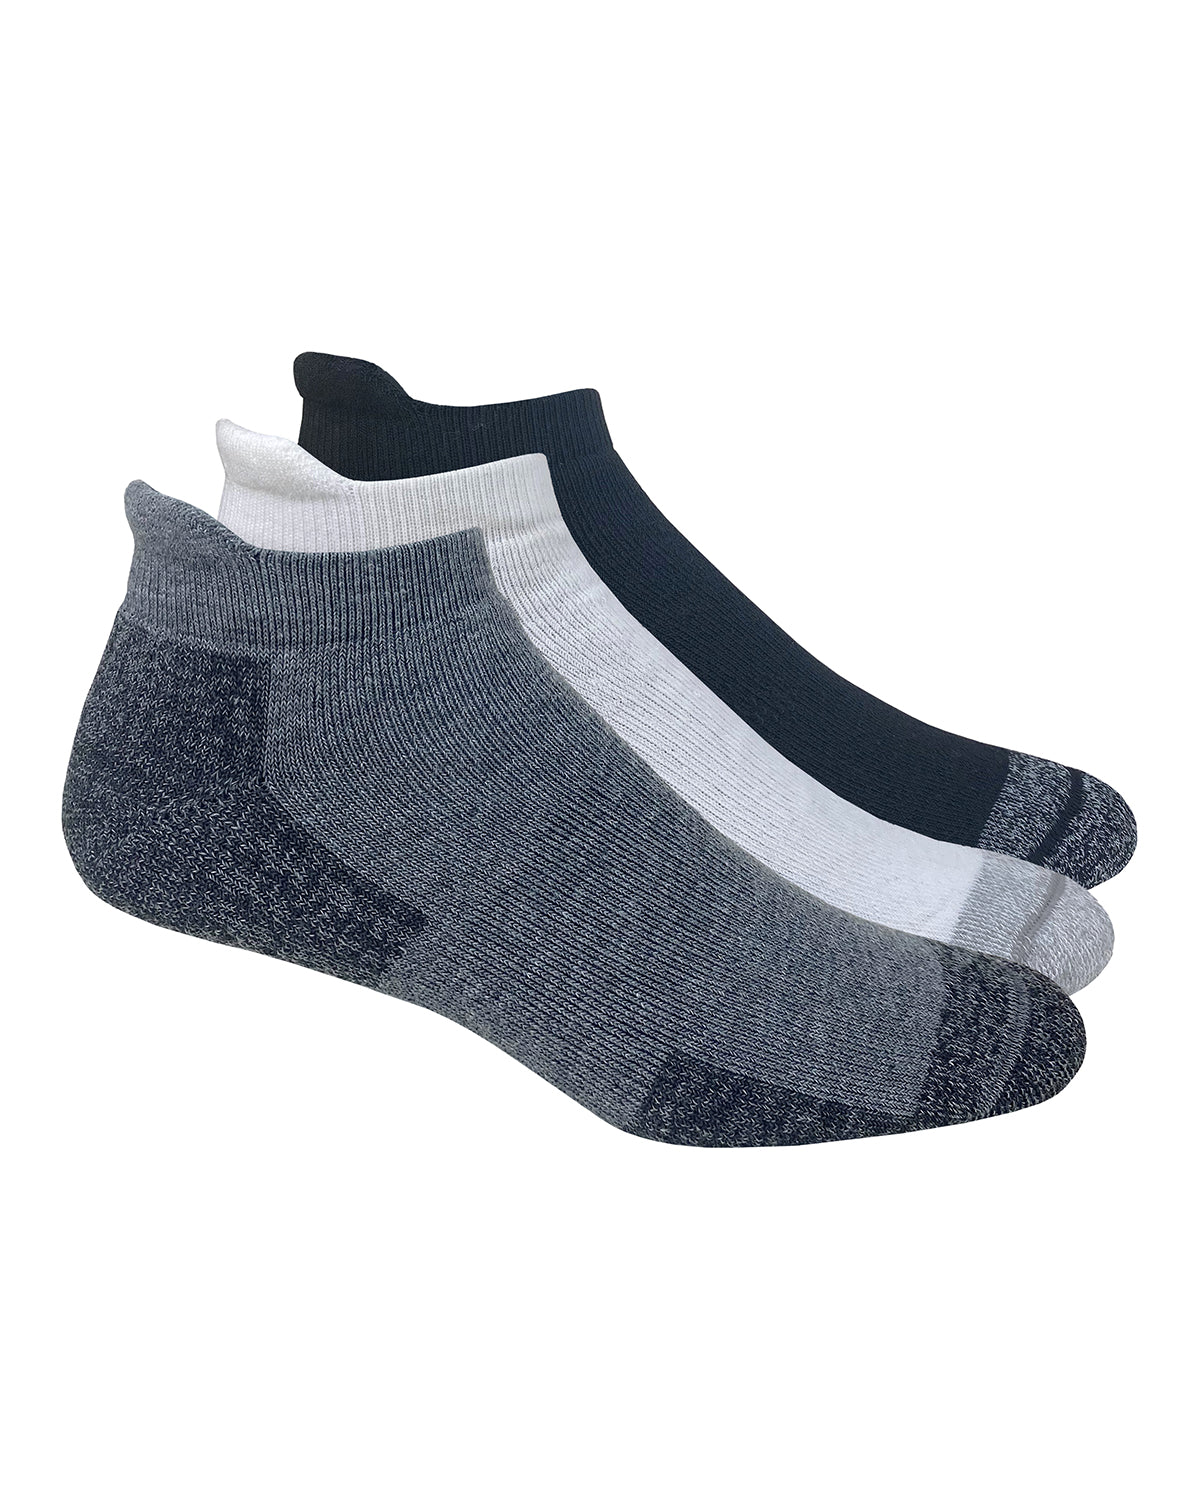 Carolina Ultimate Mens Ultra Dri Low Cut Heel Tab Athletic Socks 3 Pair Pack